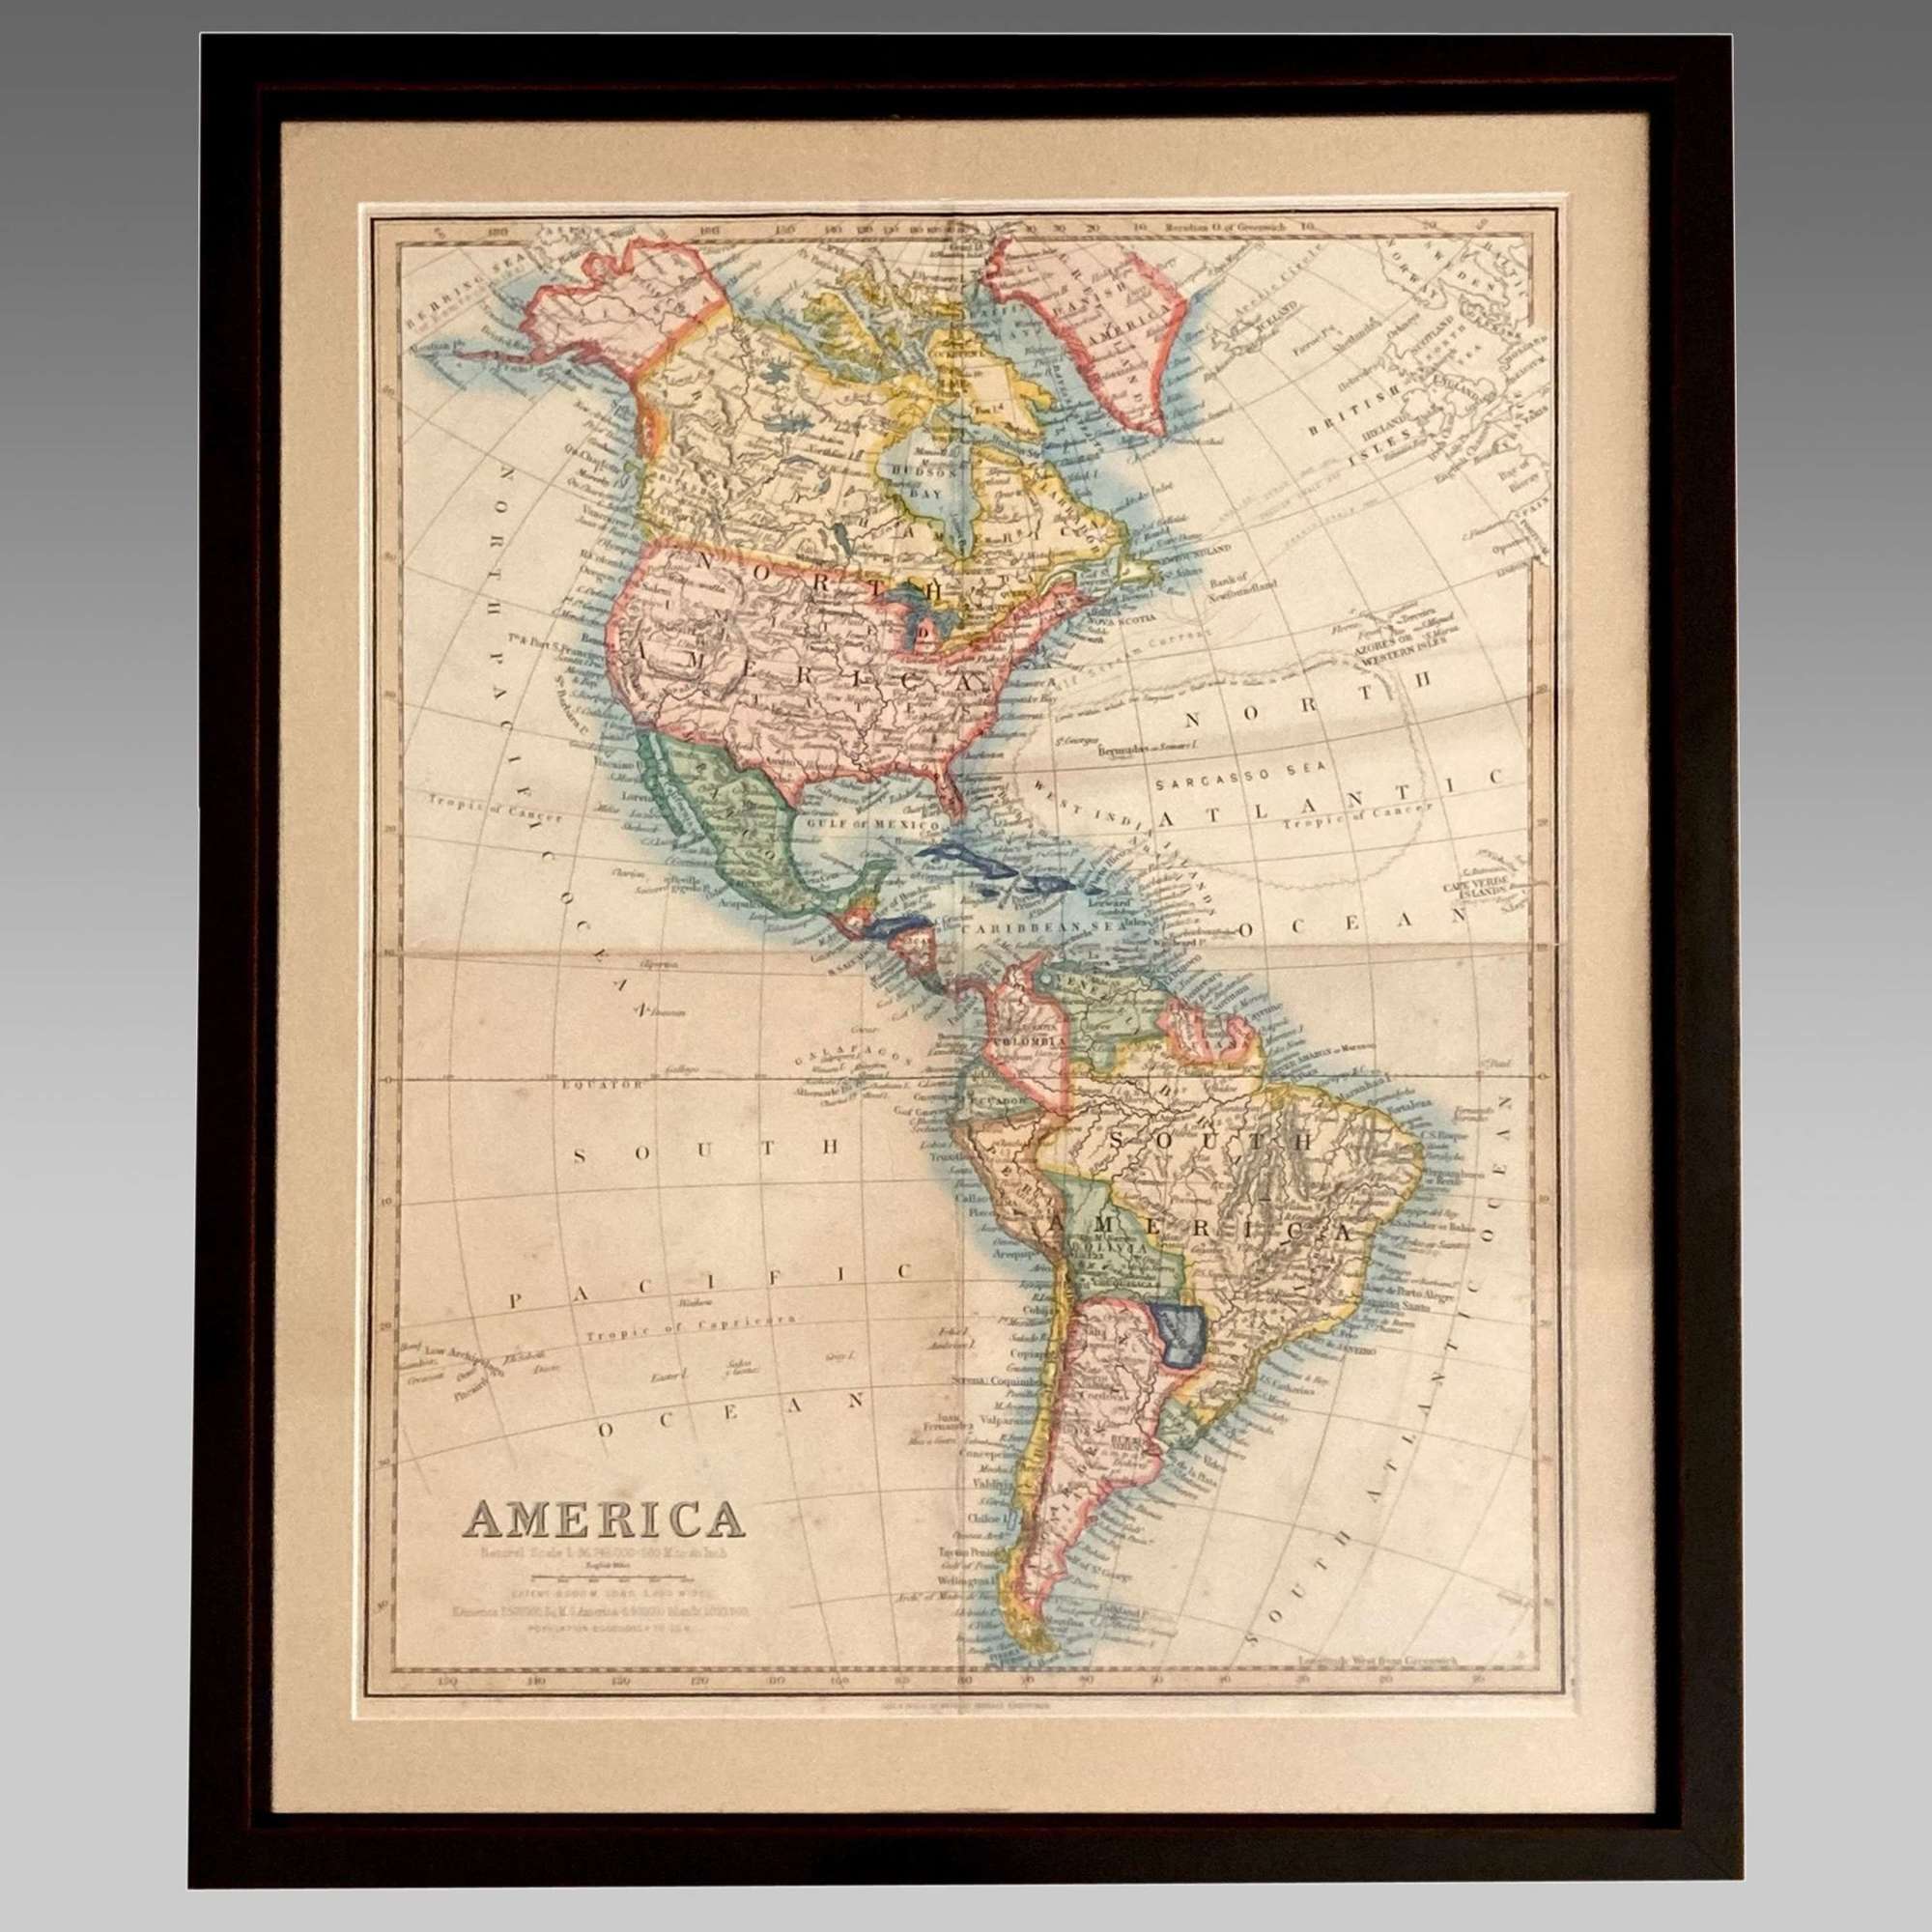 Map of America by Gall & Inglis, Edinburgh